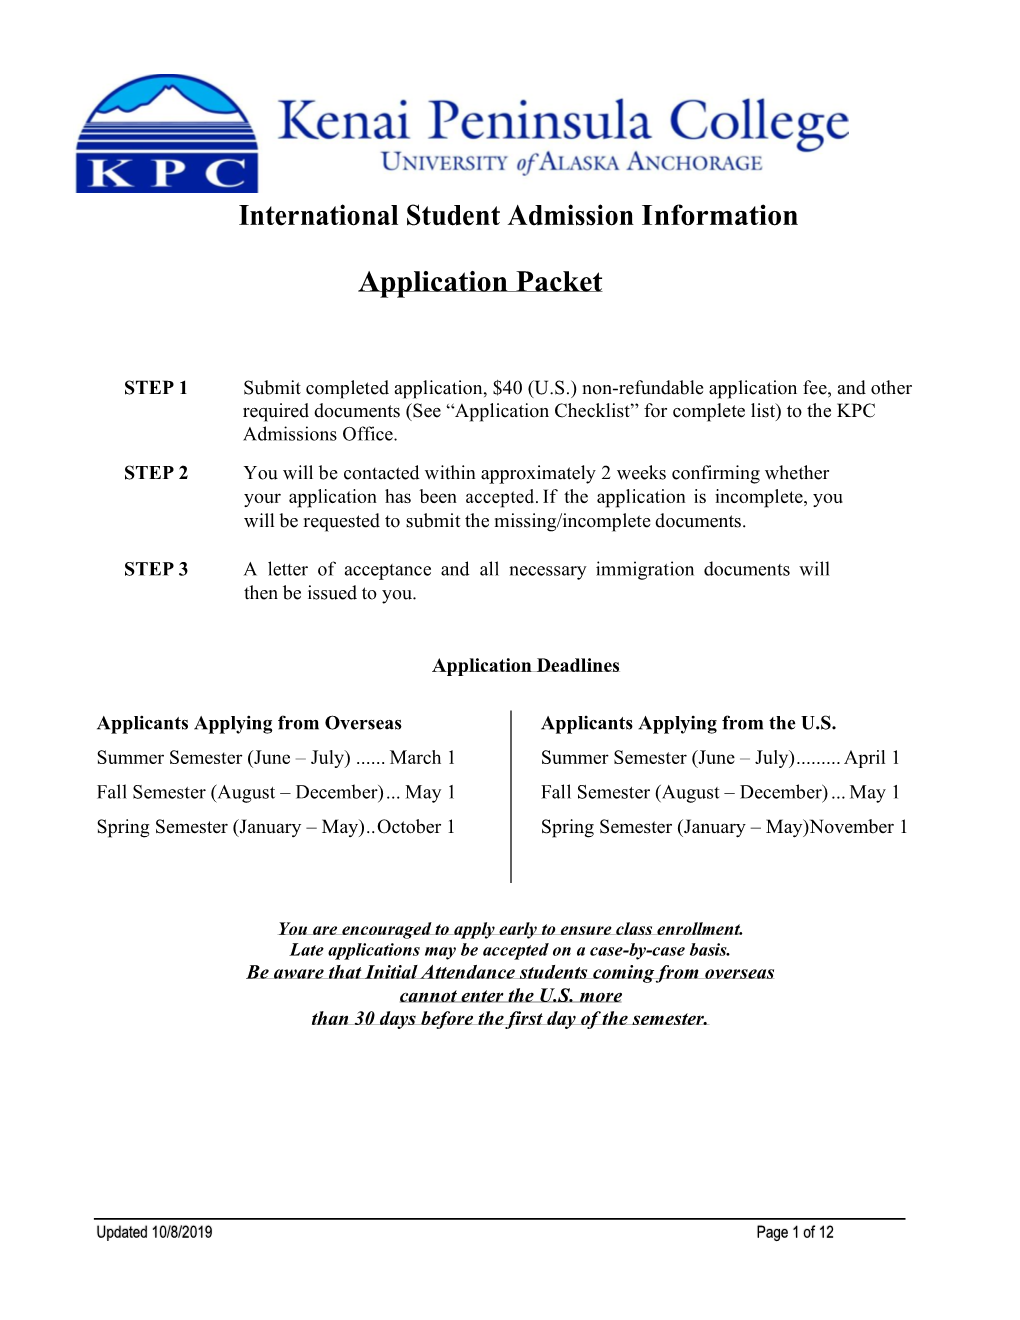 International Student Admission Information Application Packet